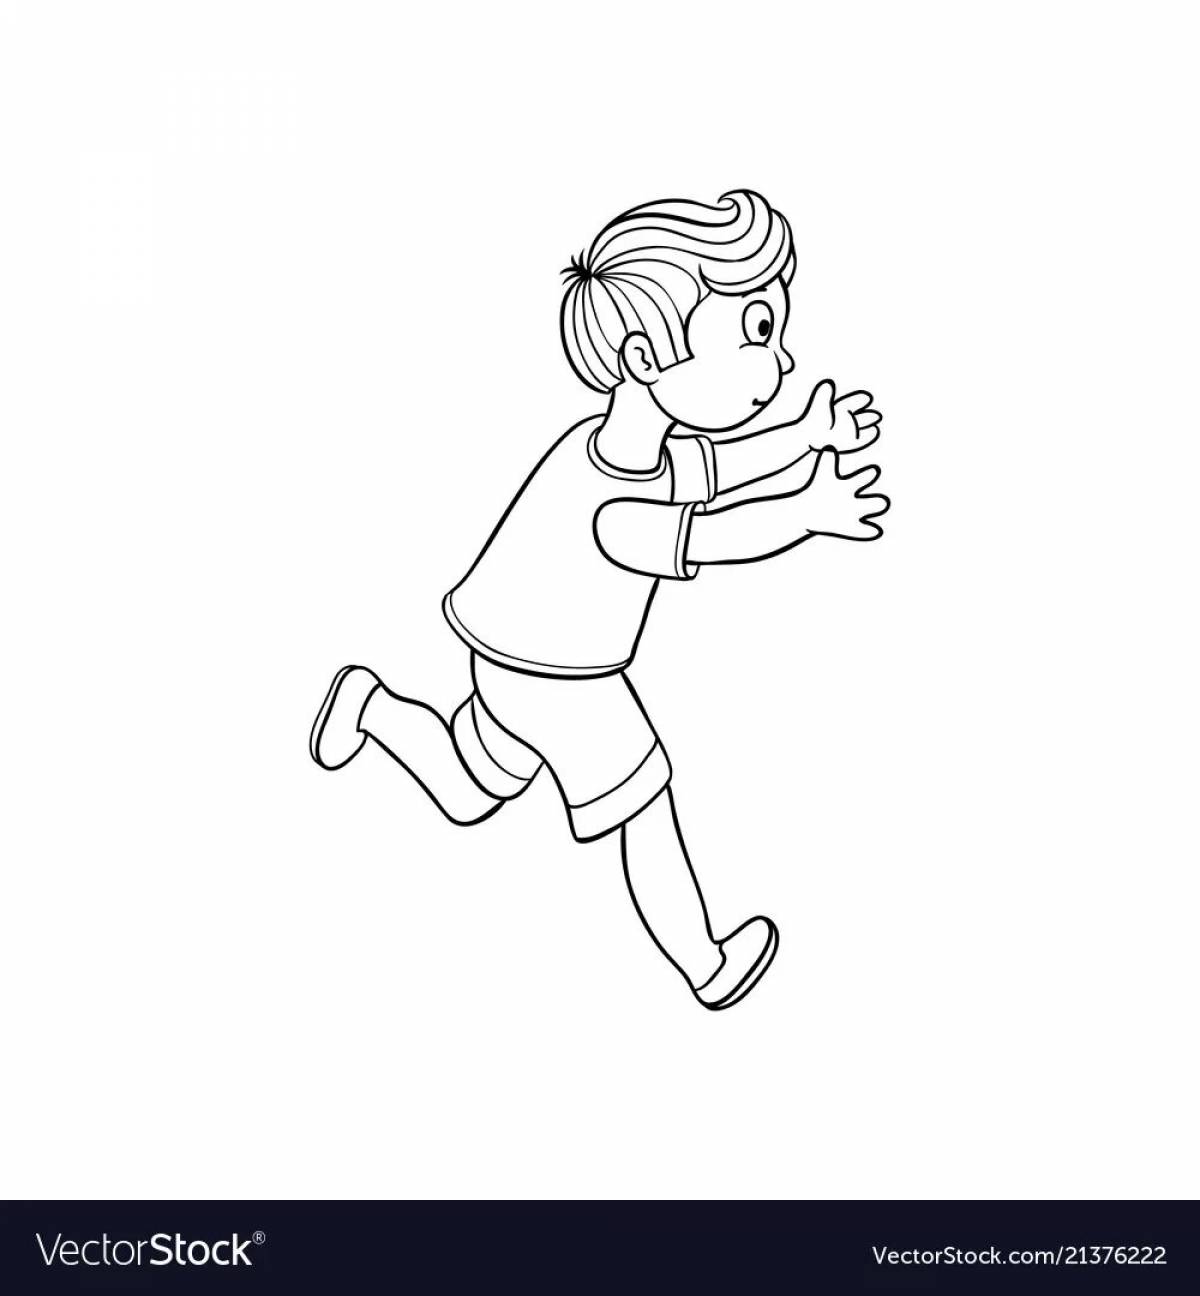 Boy running #13